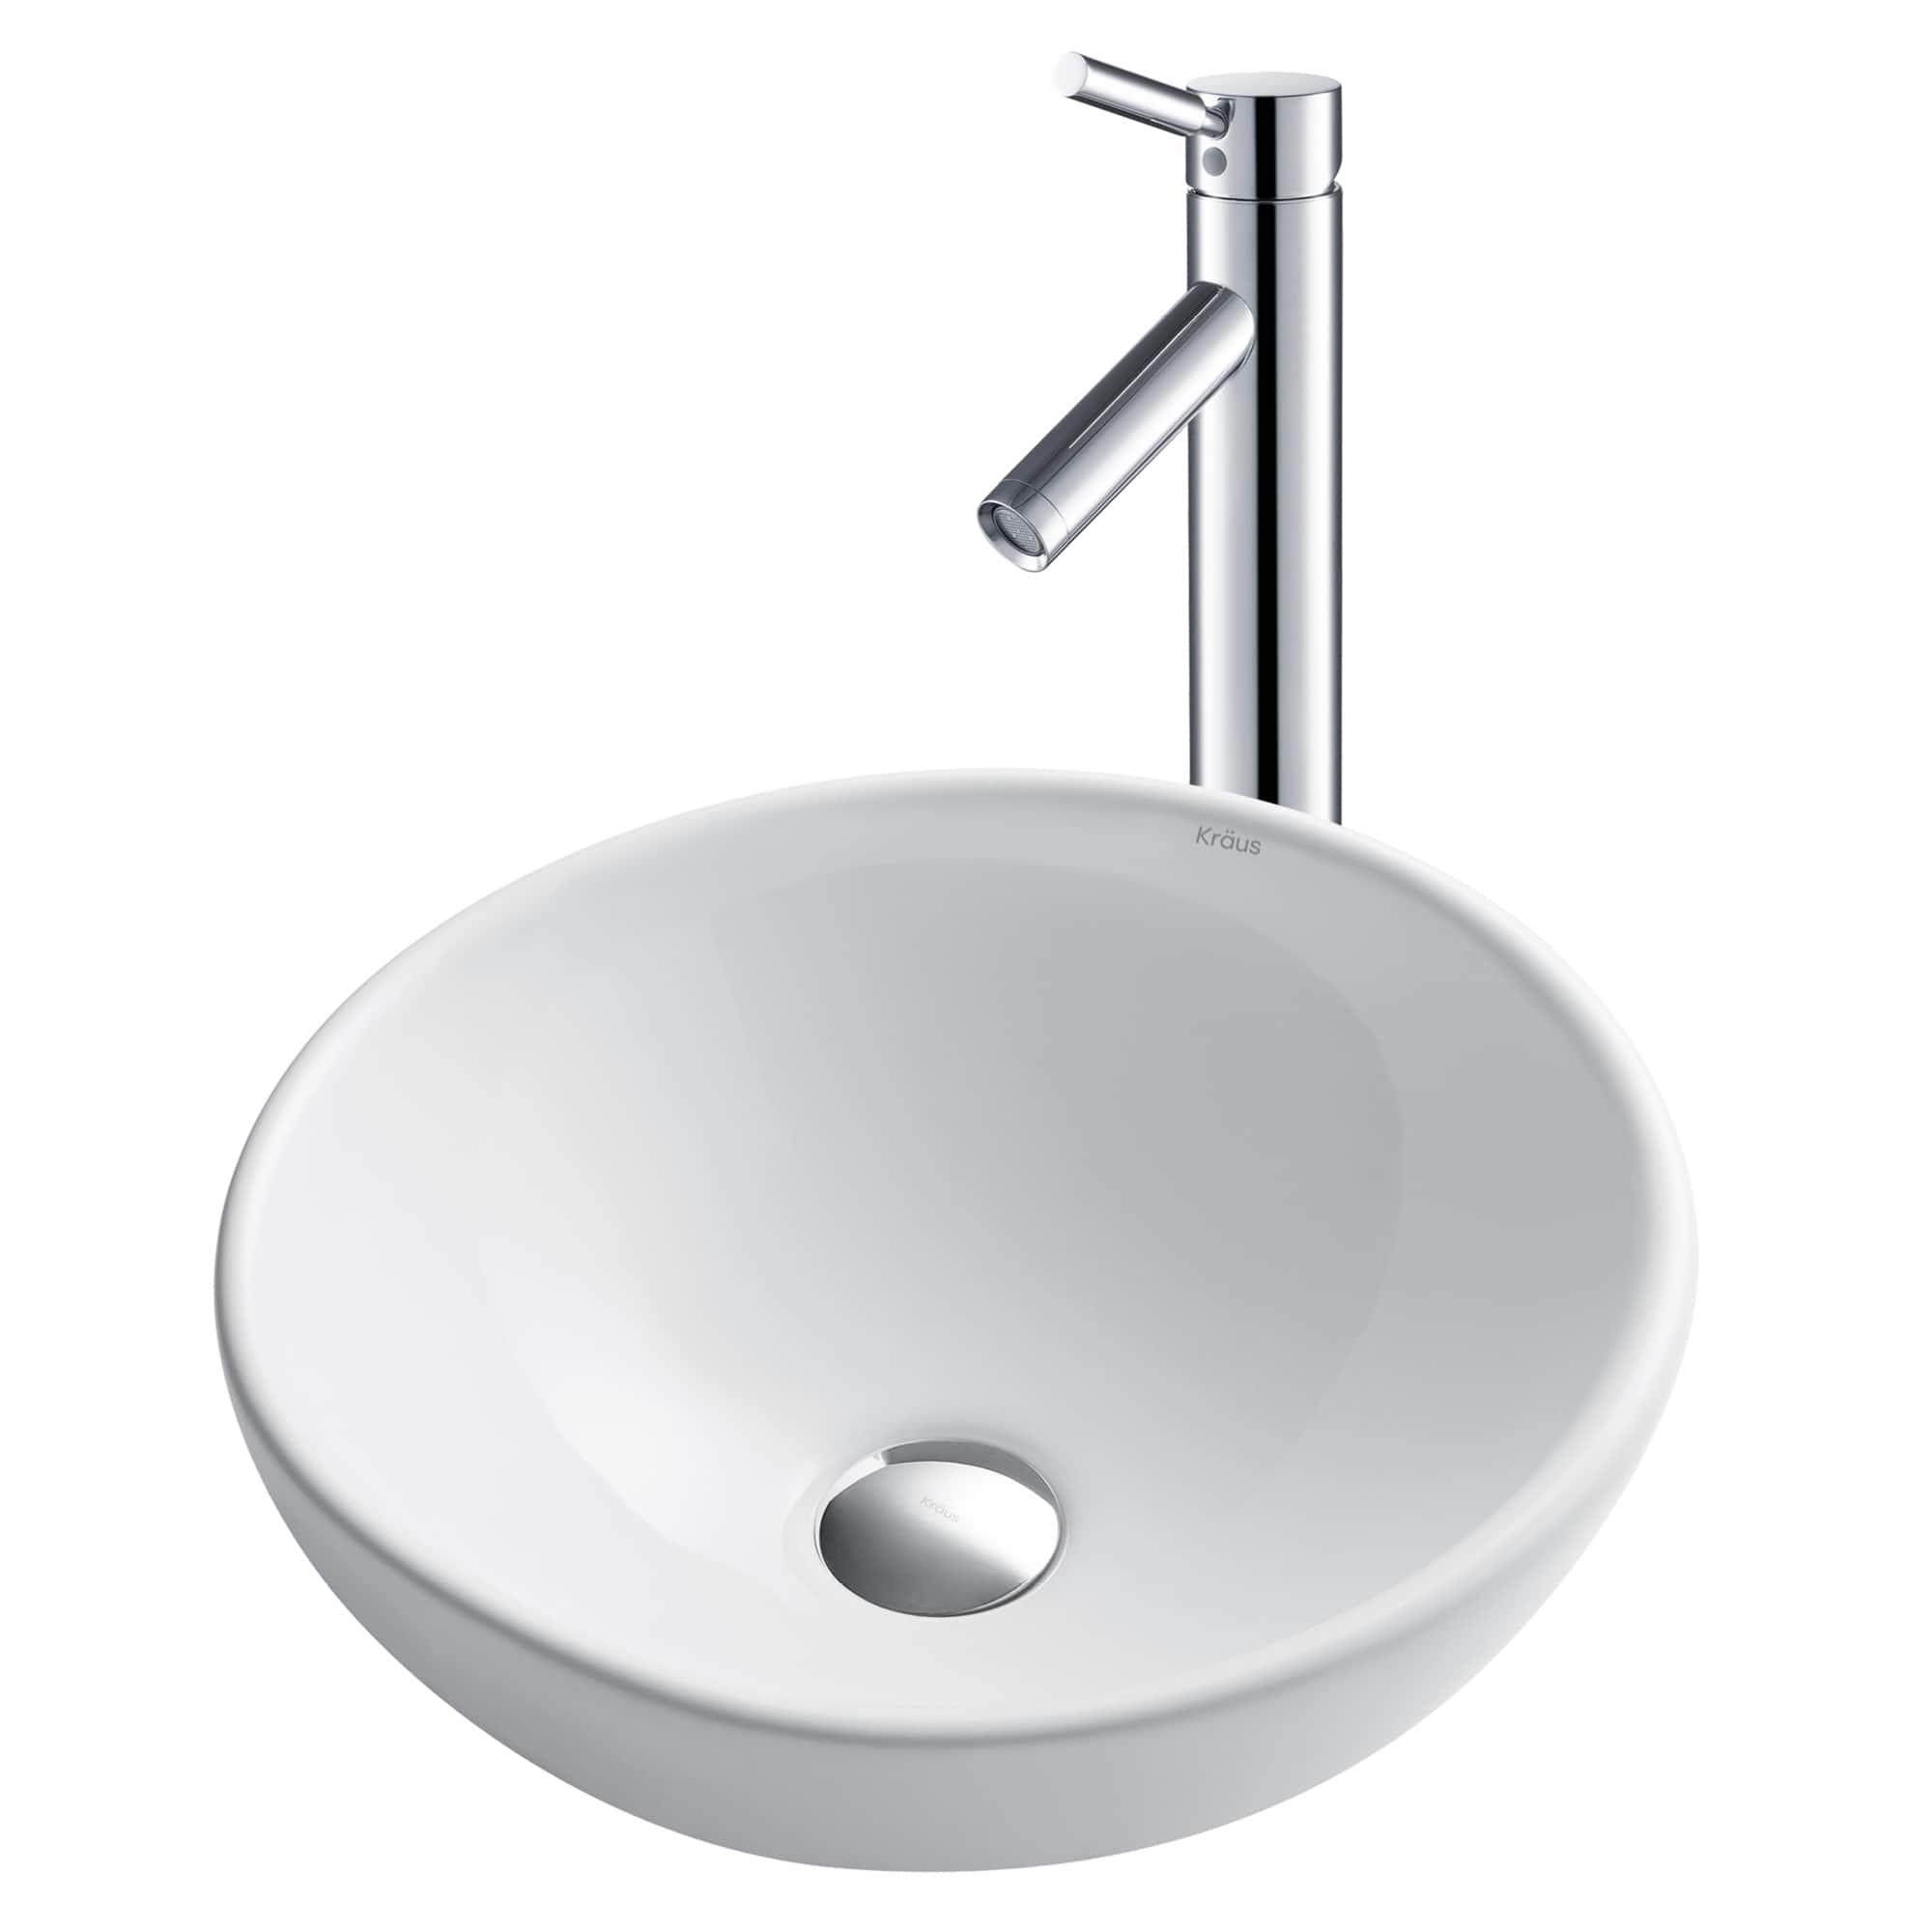 Kraus 3 In 1 Set White Round Ceramic Vessel Sink Sheven Faucet W Drain Overstock 4068604